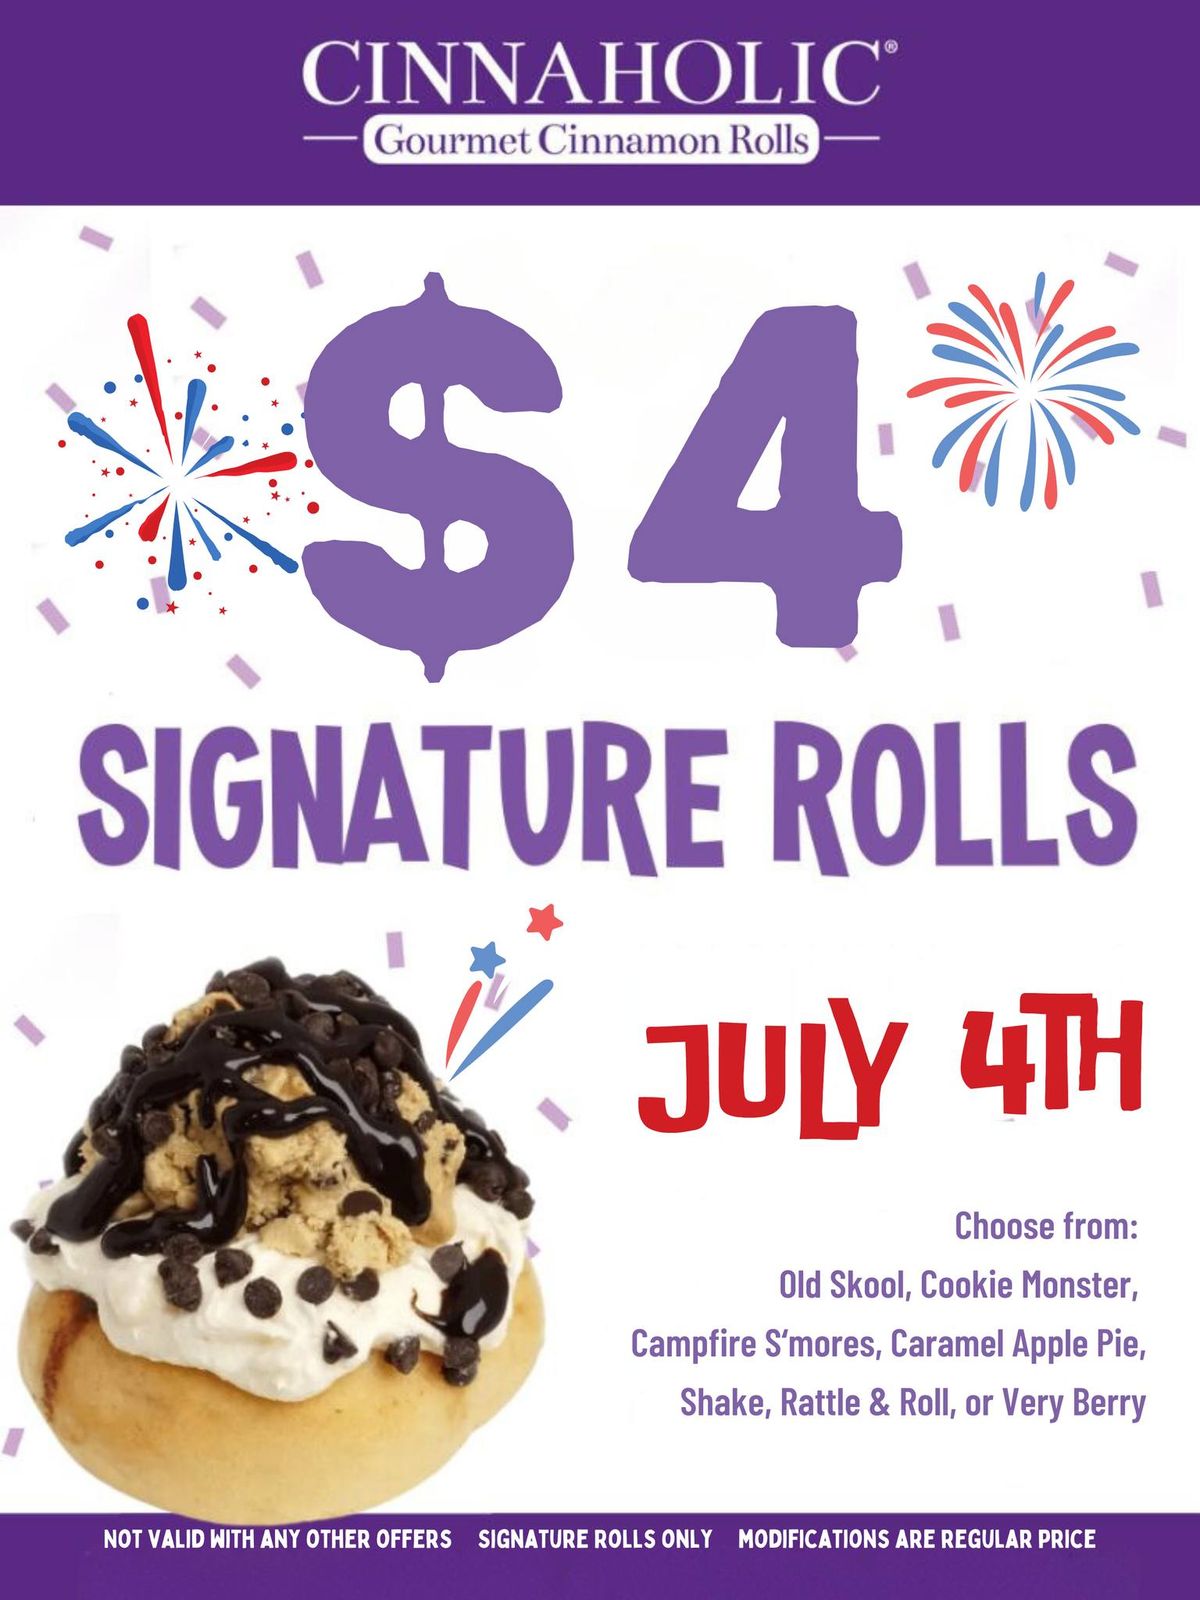 $4 Signature Rolls on July 4th